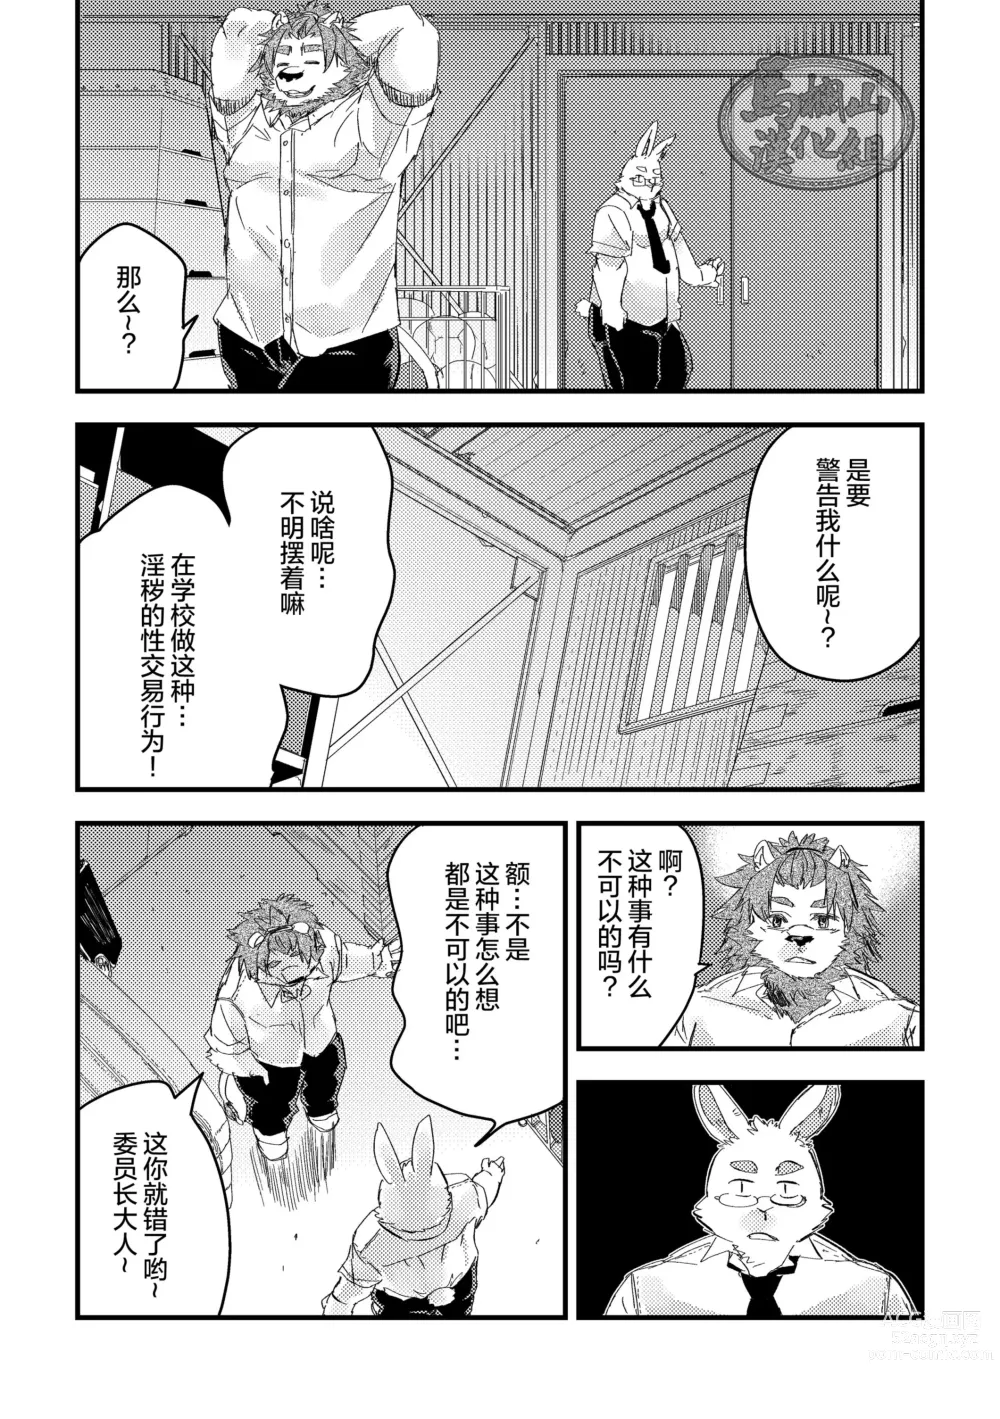 Page 10 of manga 獅子は兎を狩るのにも